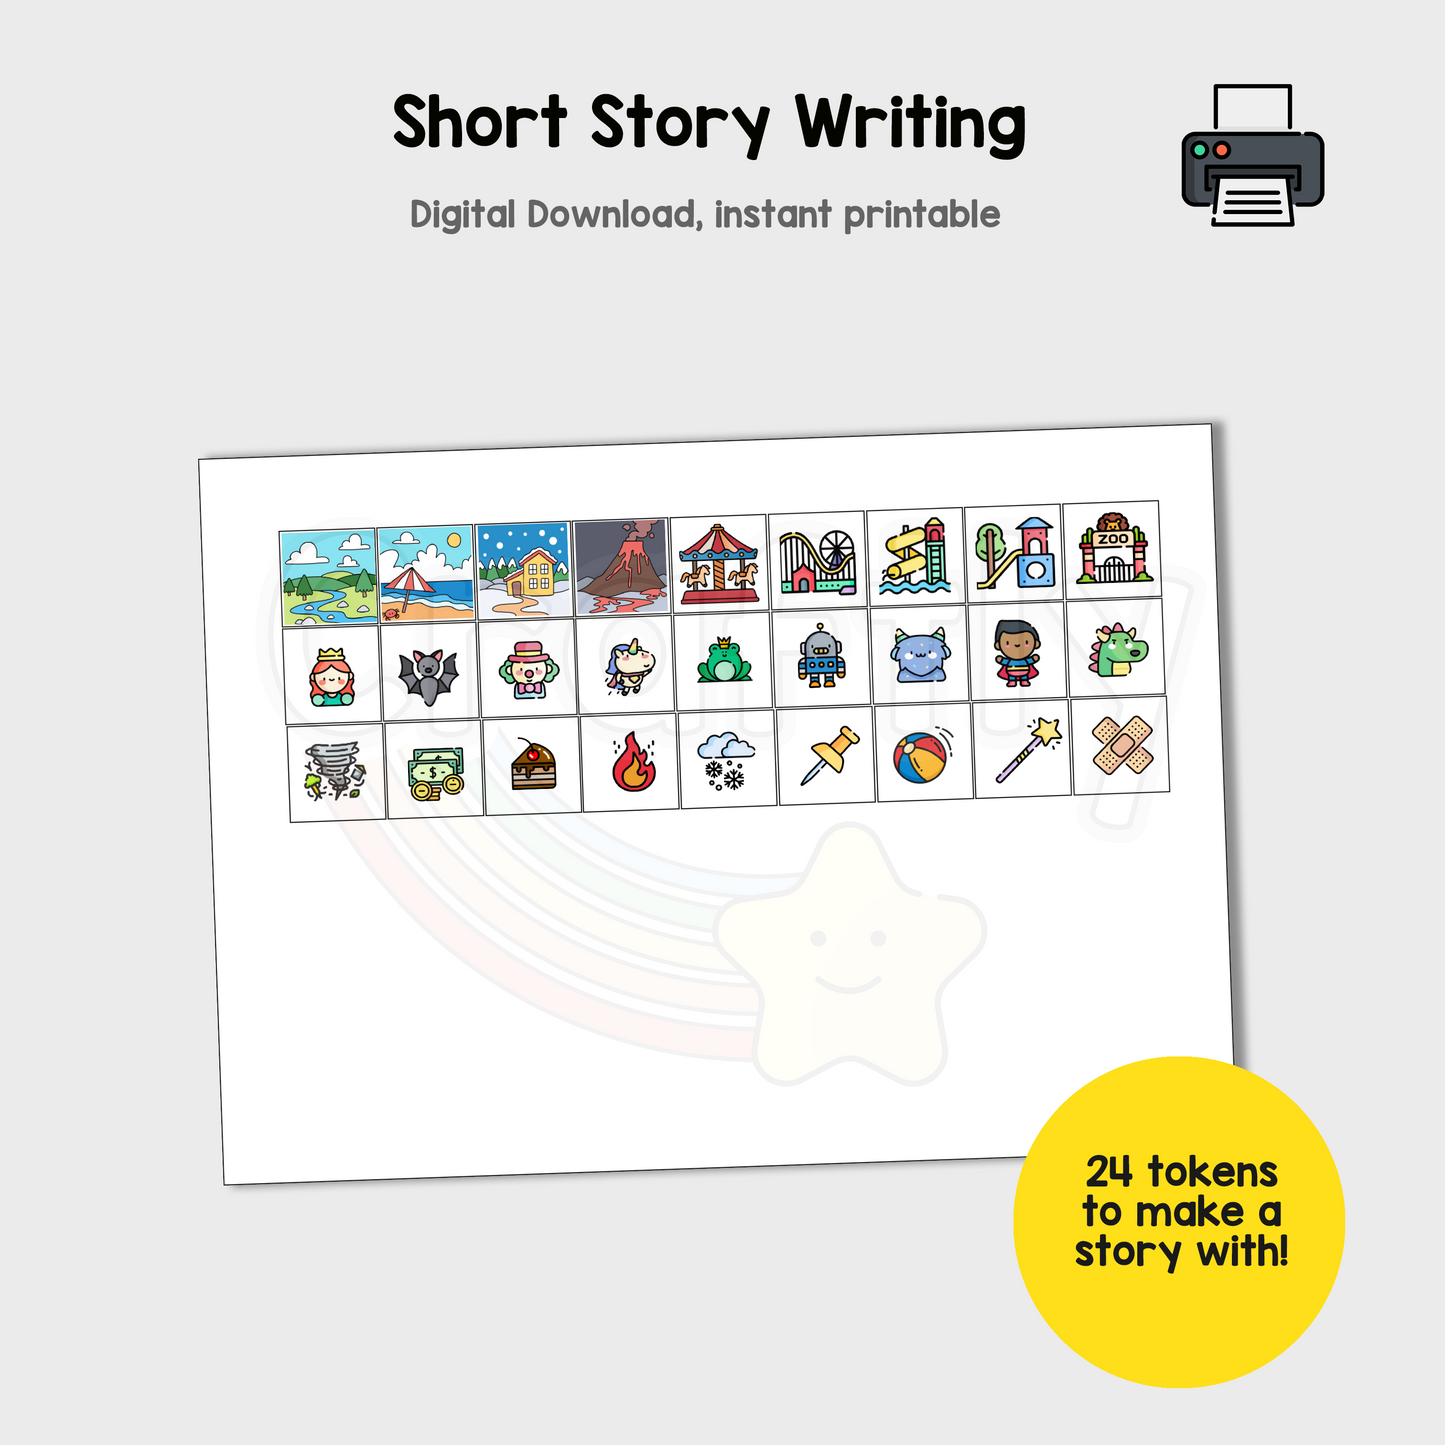 Short Story Writing Guide